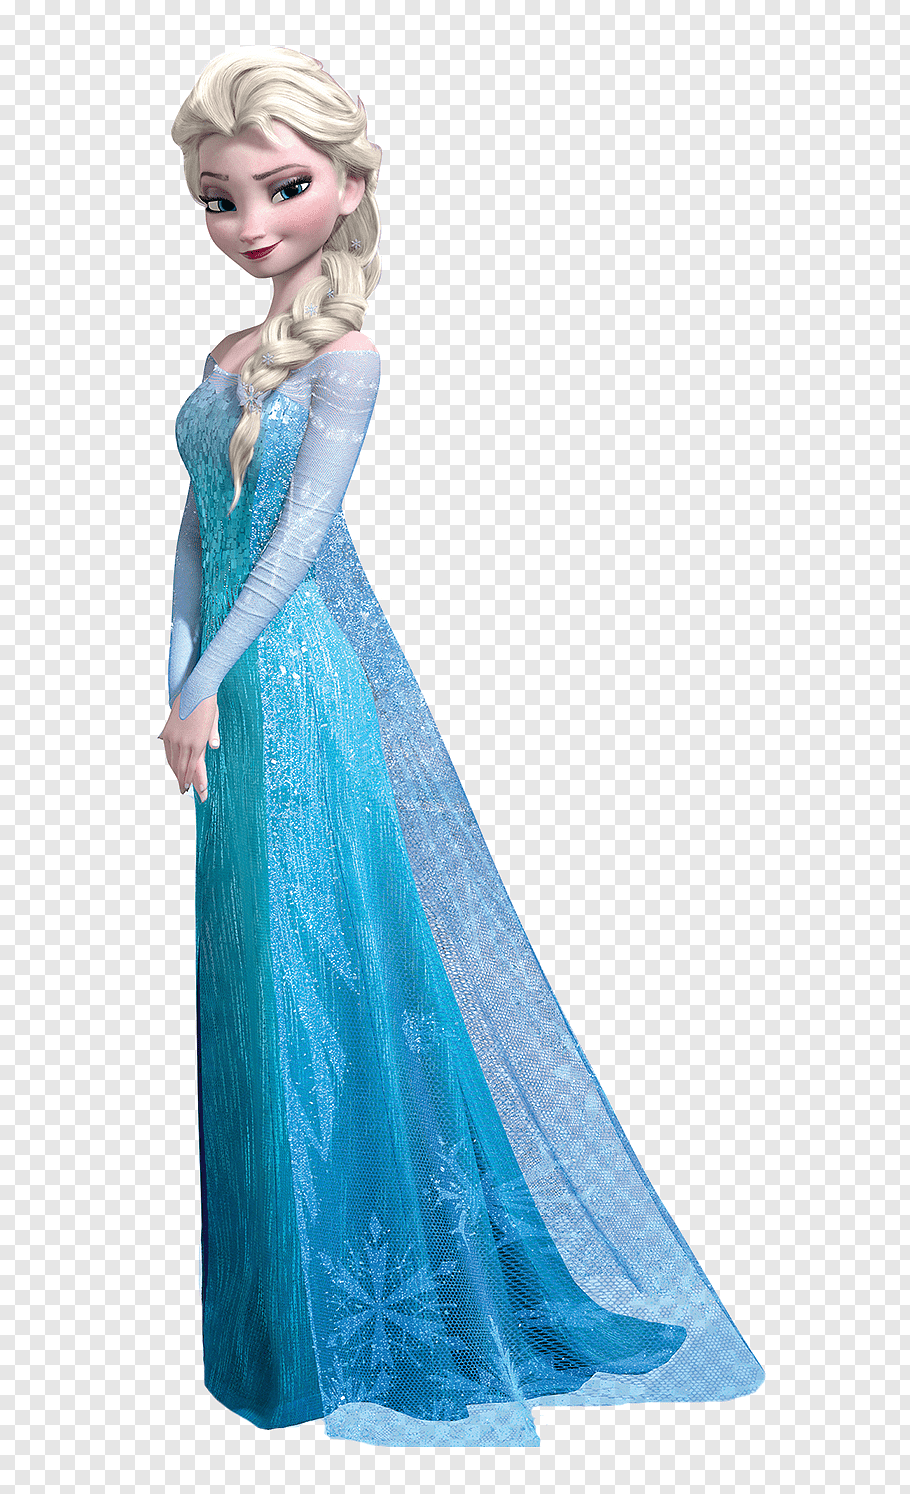 Disney Frozen Elsa, Elsa Frozen Anna The Snow Queen Olaf, Anna Frozen, disney Pr